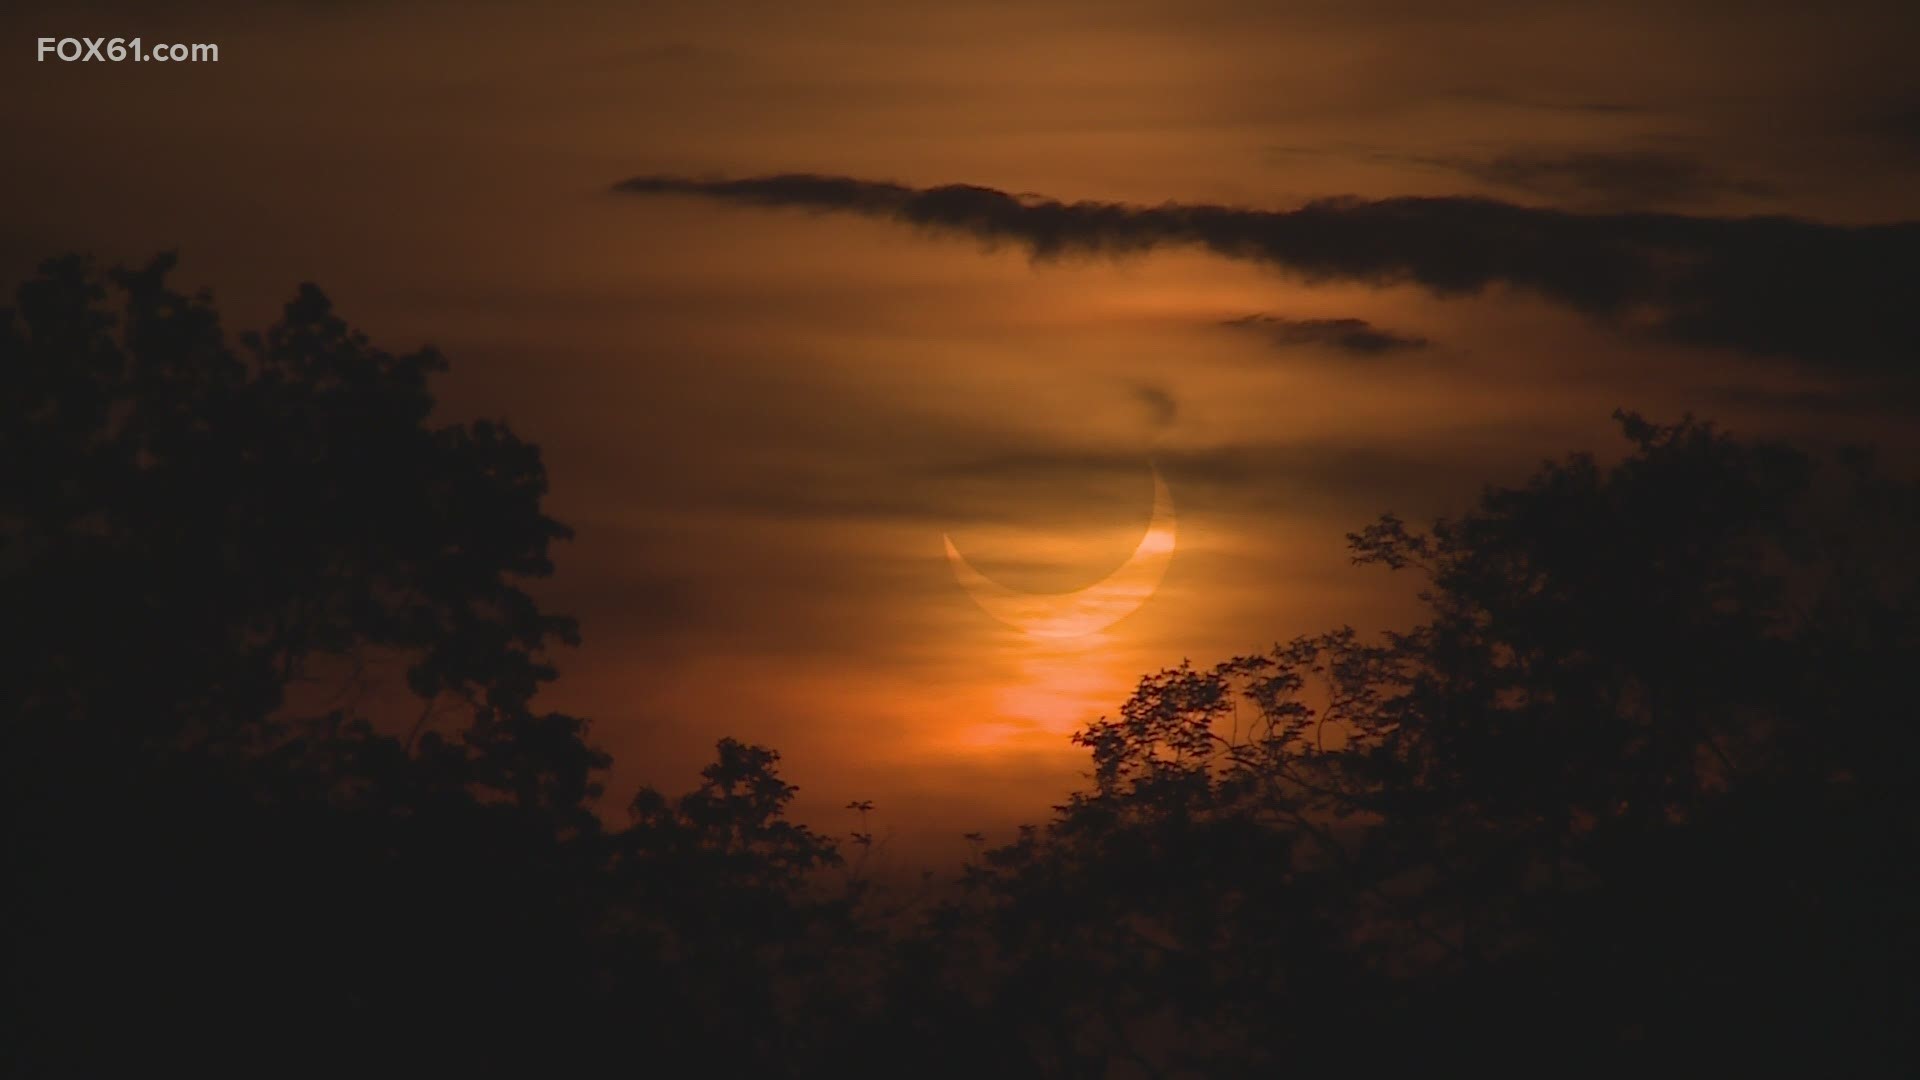 Eclipse happened during sunrise